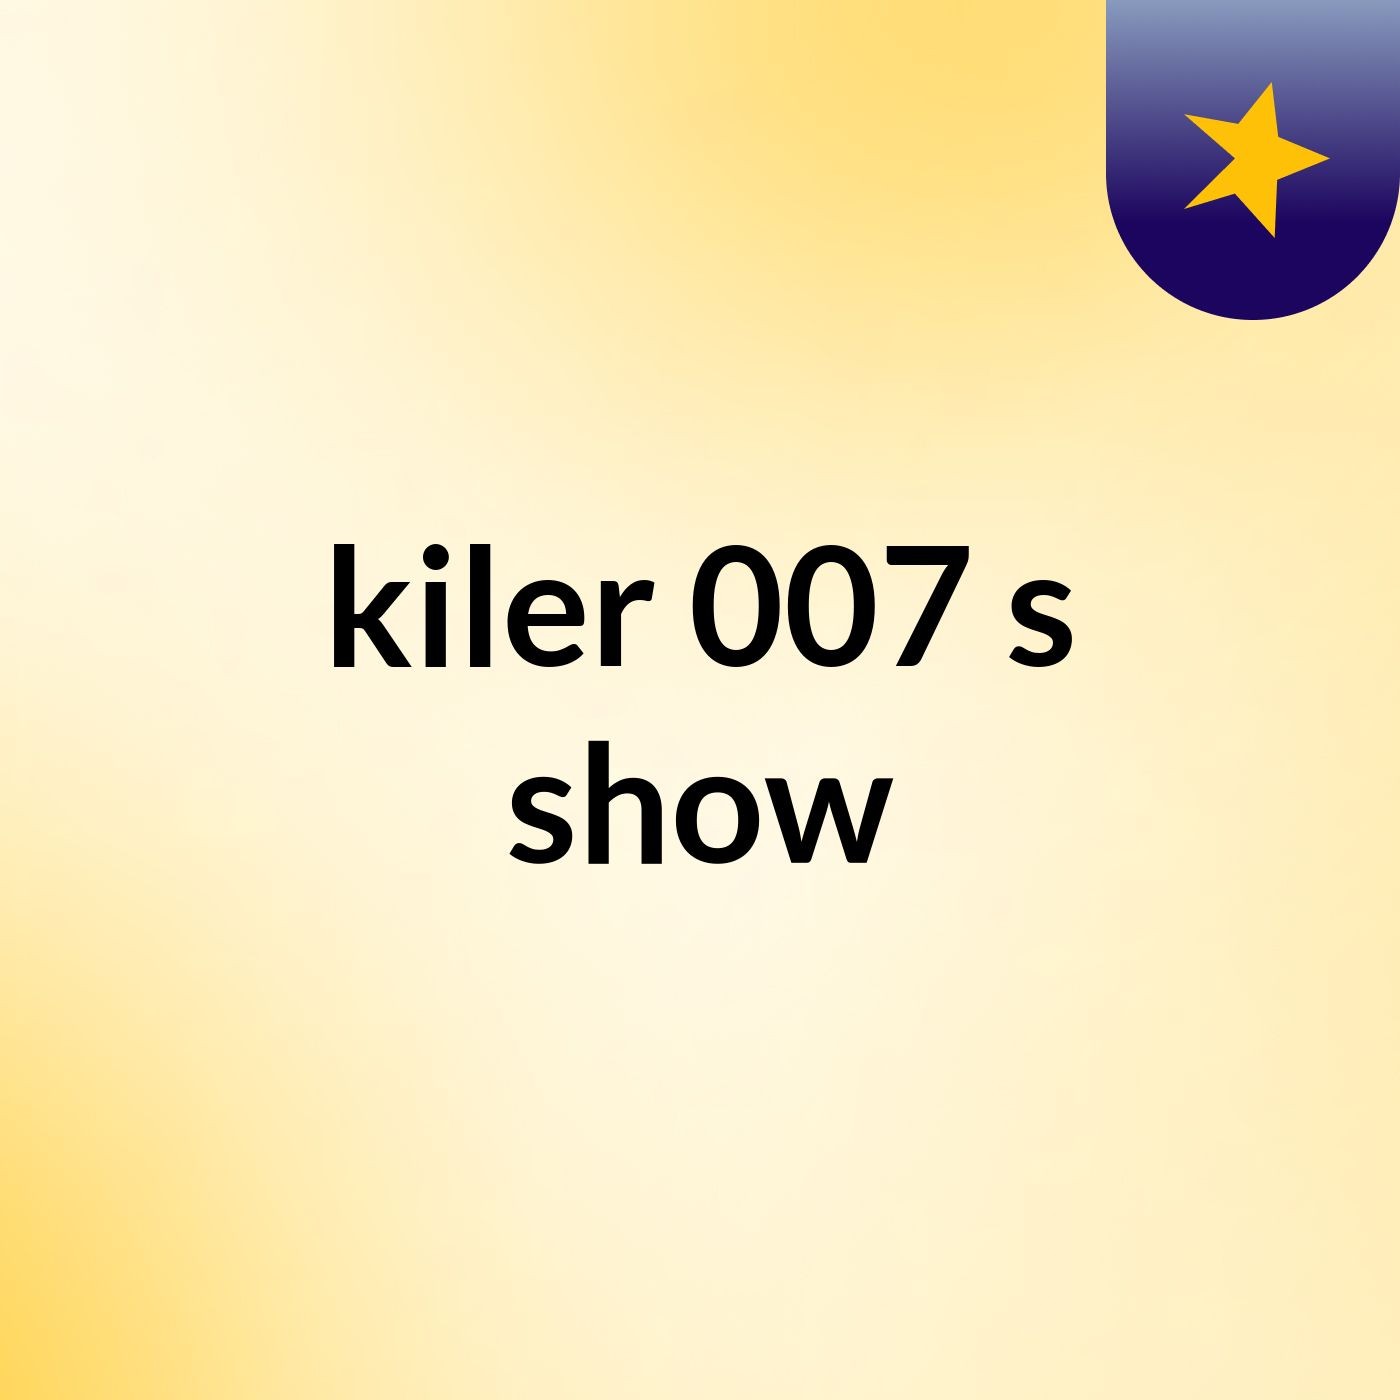 kiler 007's show